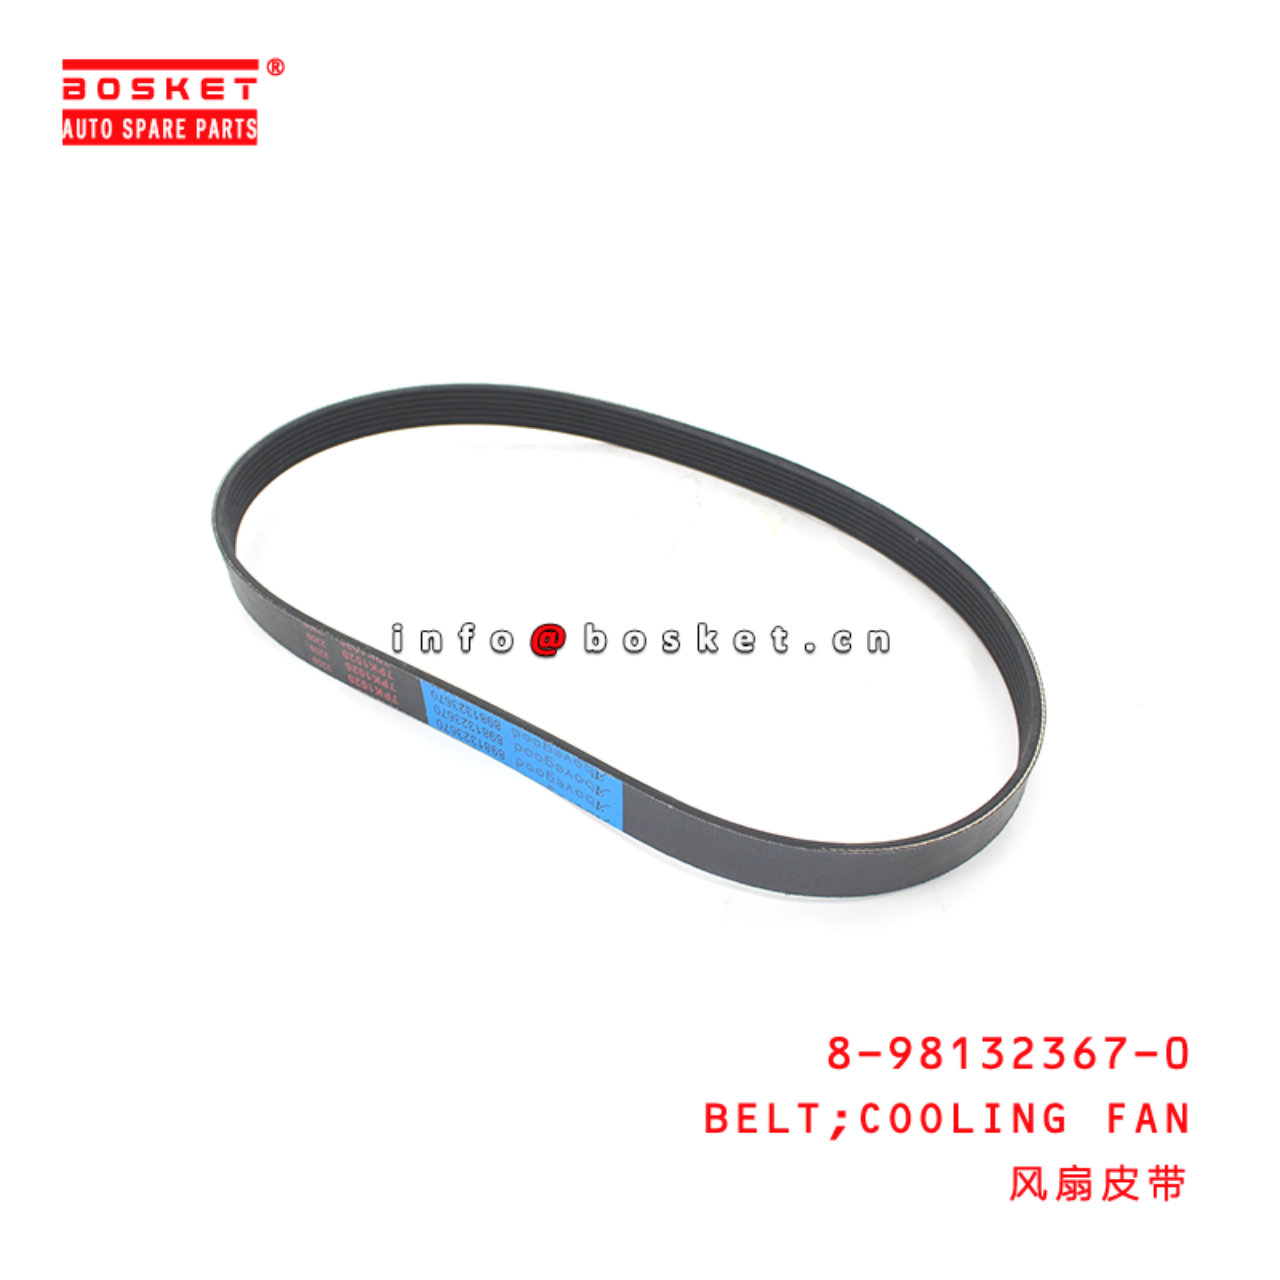 8-98132367-0 Cooling Fan Belt Suitable for ISUZU DMAX 4JA1 8981323670